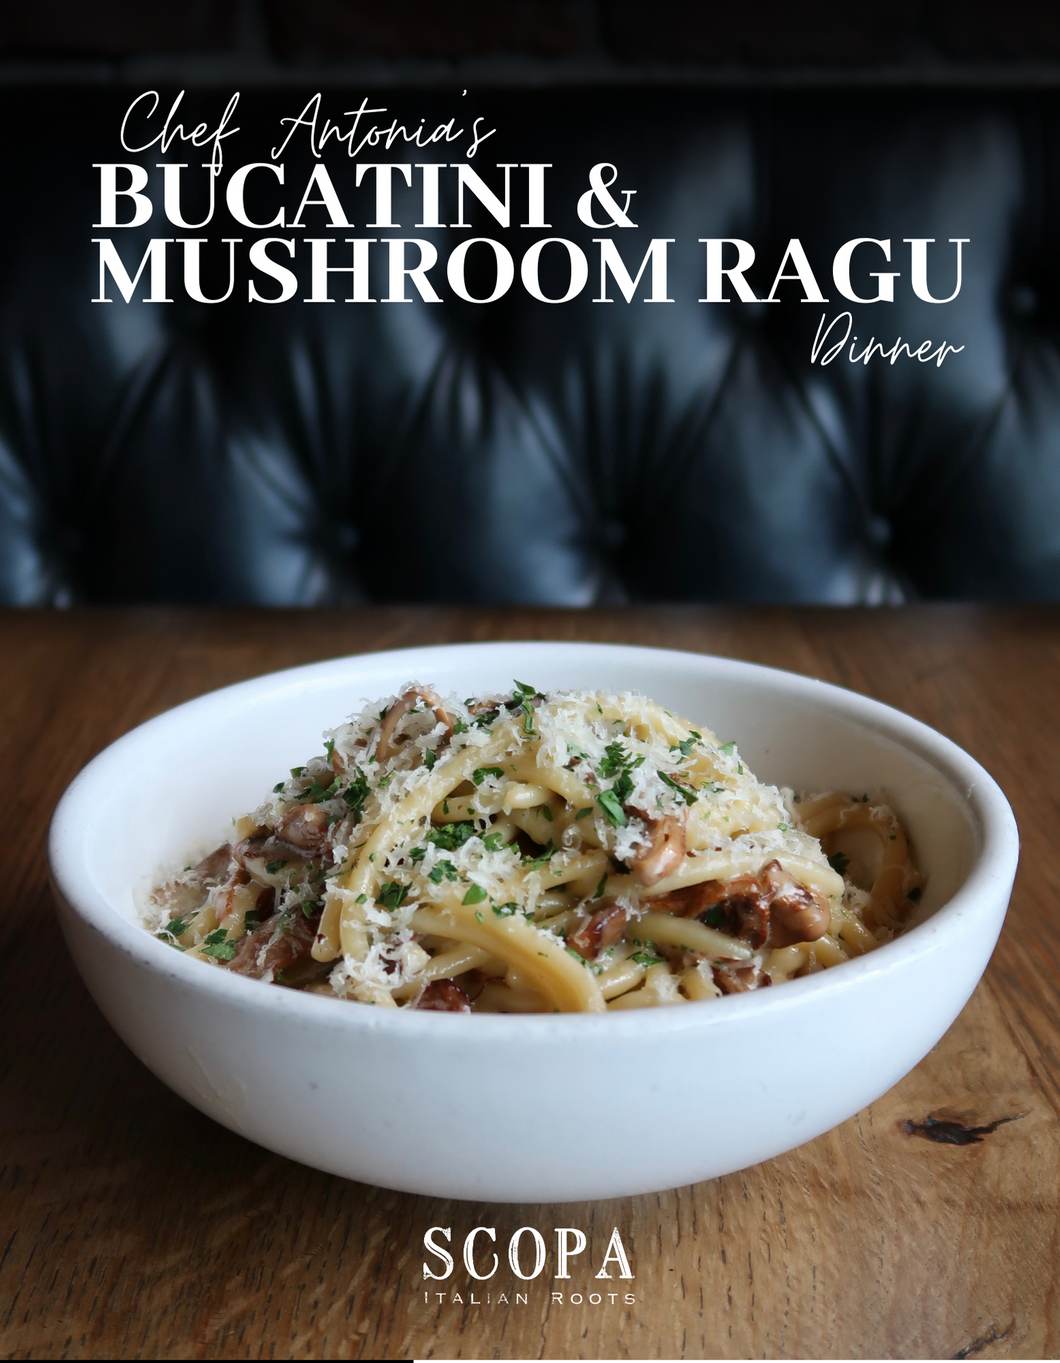 Bucatini & Mushroom Ragu Family Pasta Dinner